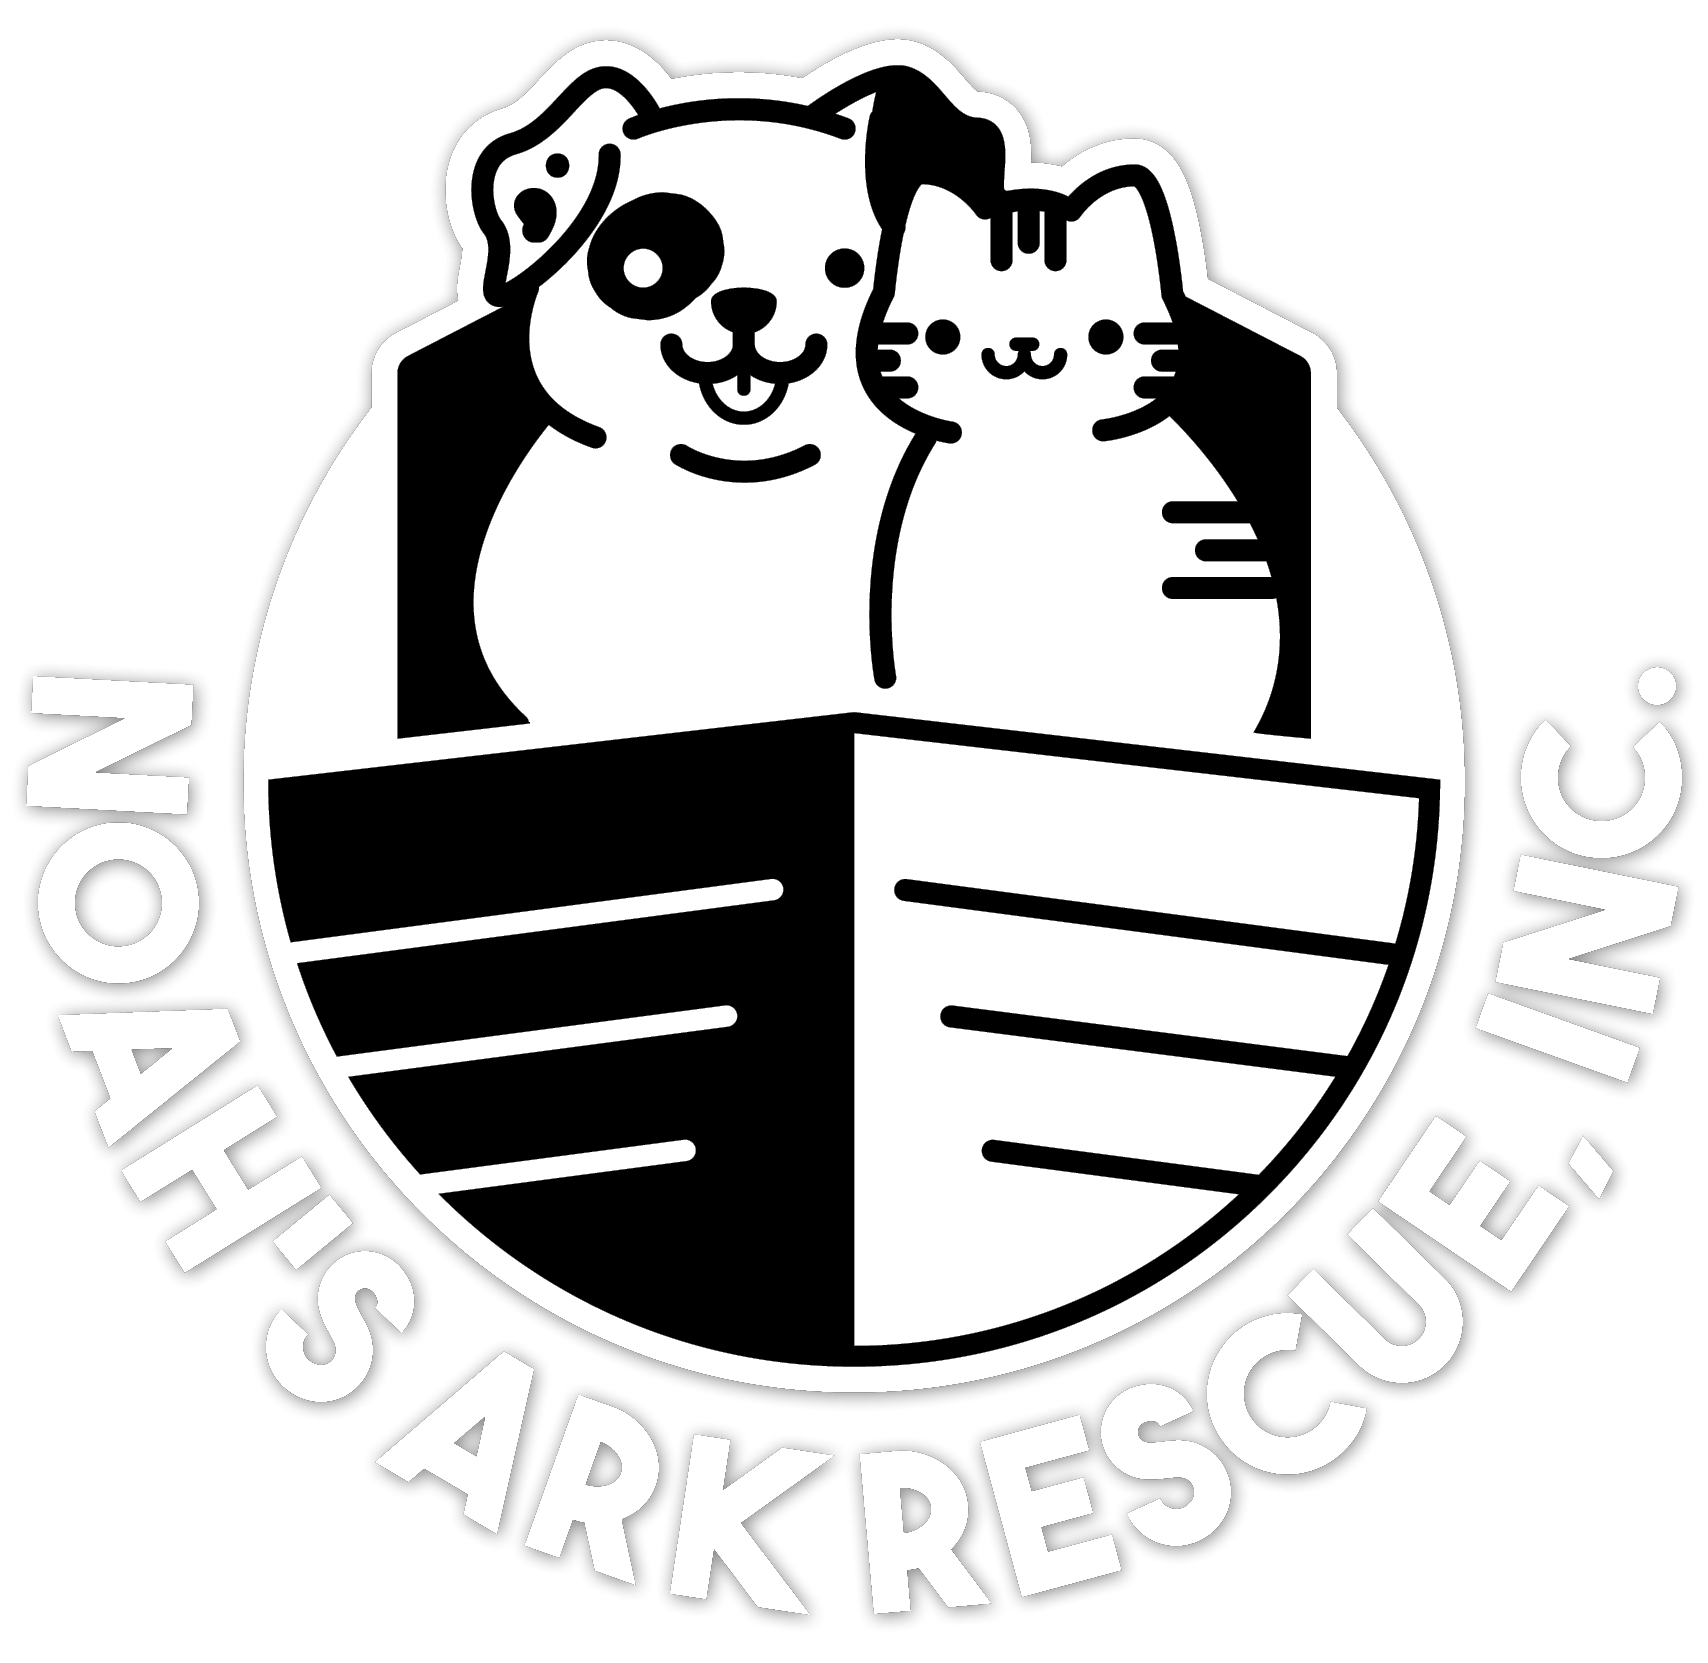 Noah’s Ark Rescue, Inc.